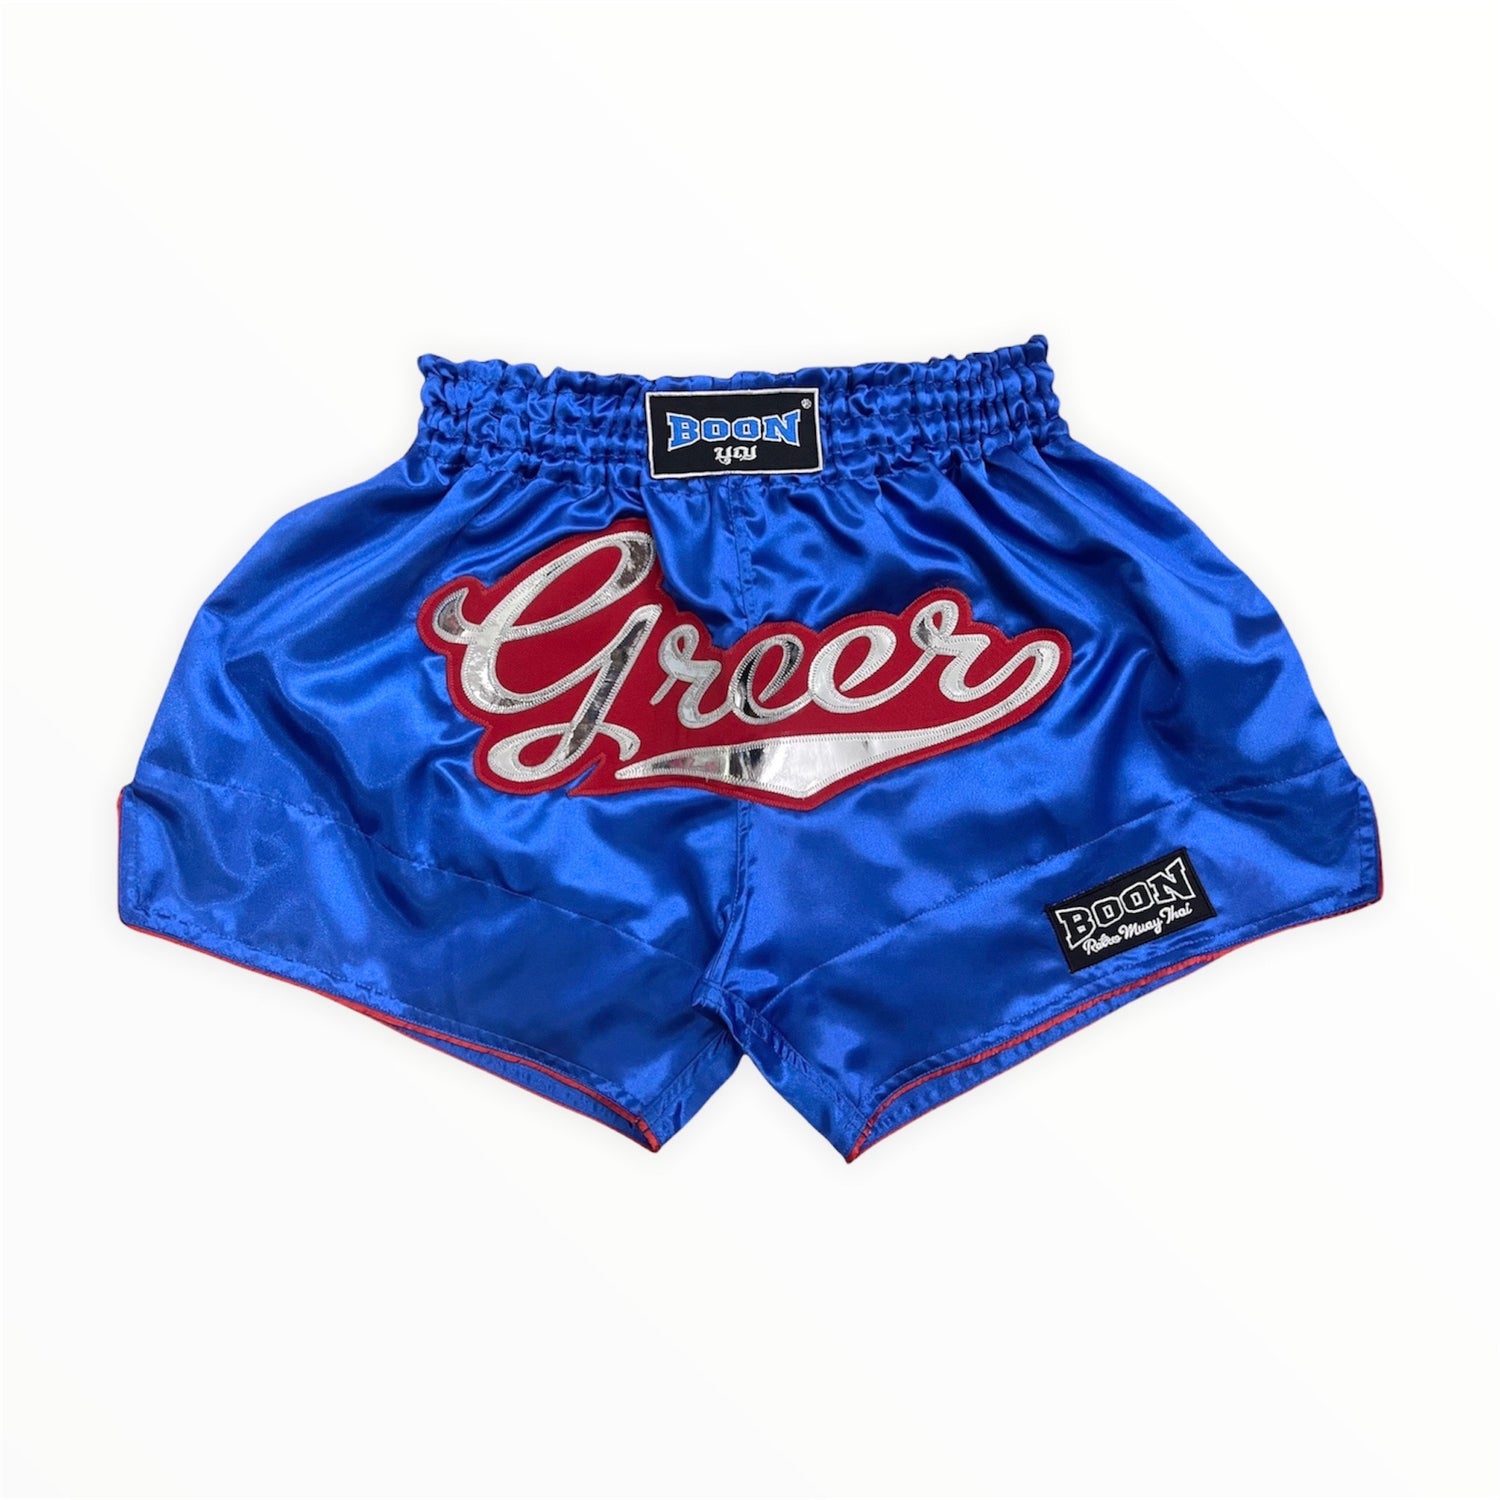 Custom Retro Muay Thai Shorts